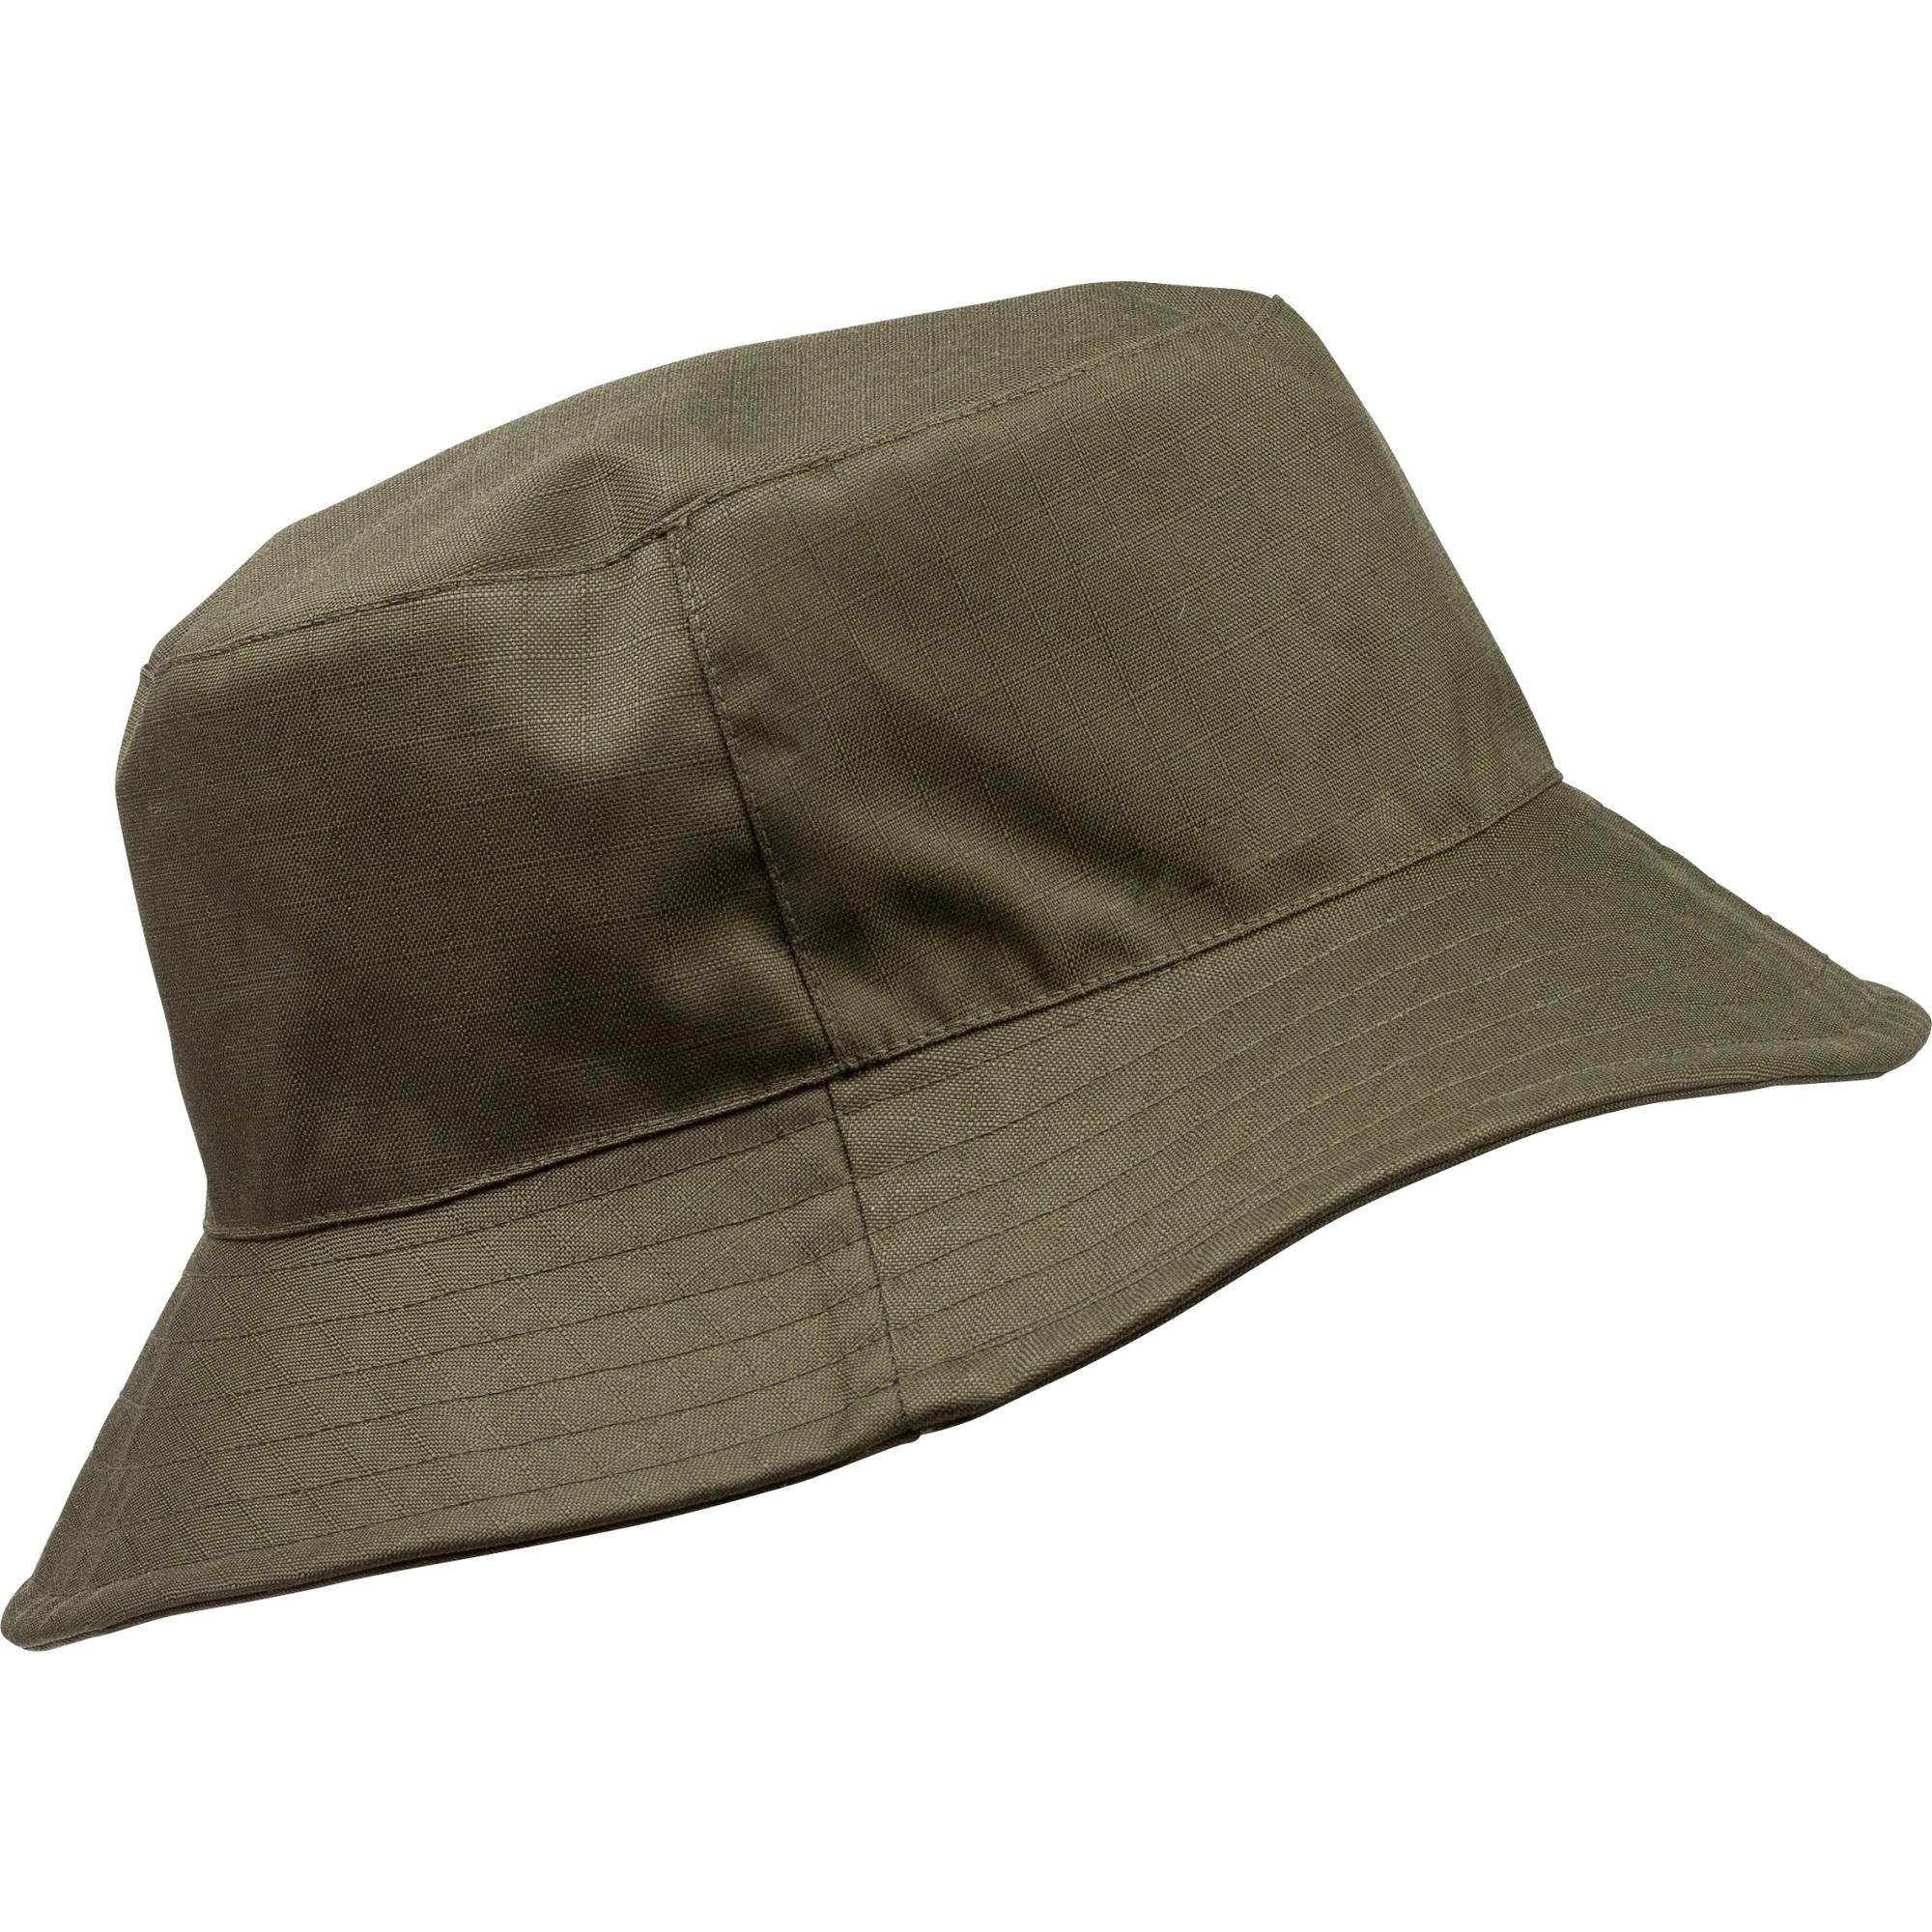 Waterproof bob hunting hat - green 